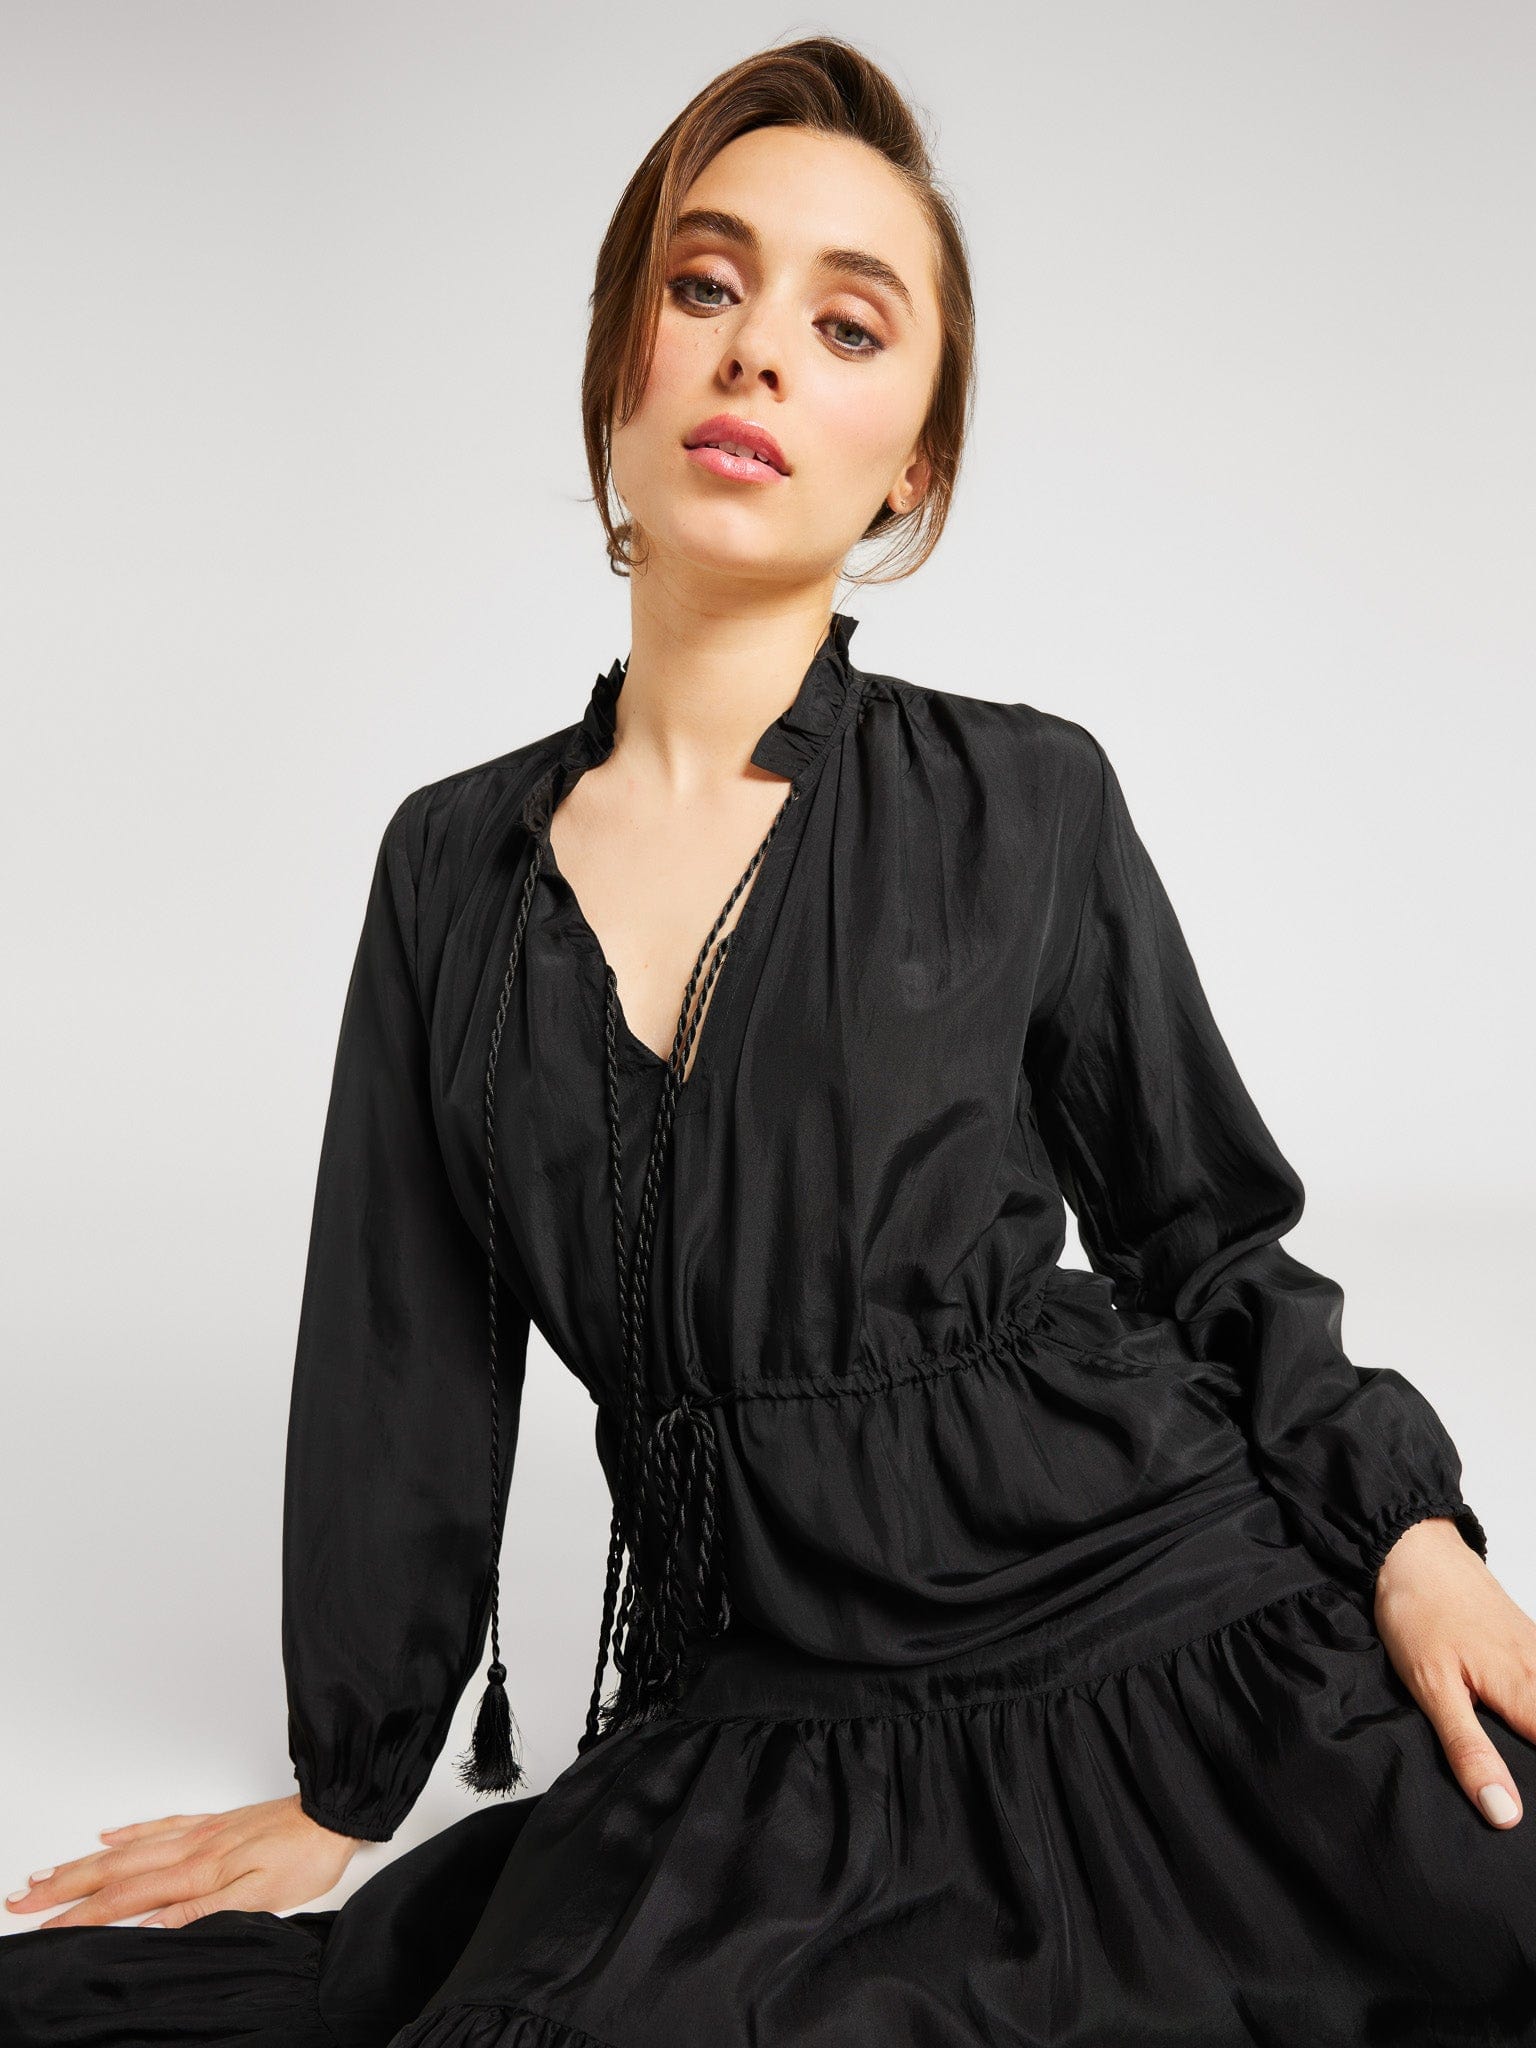 MILLE Clothing Astrid Dress in Black Silk